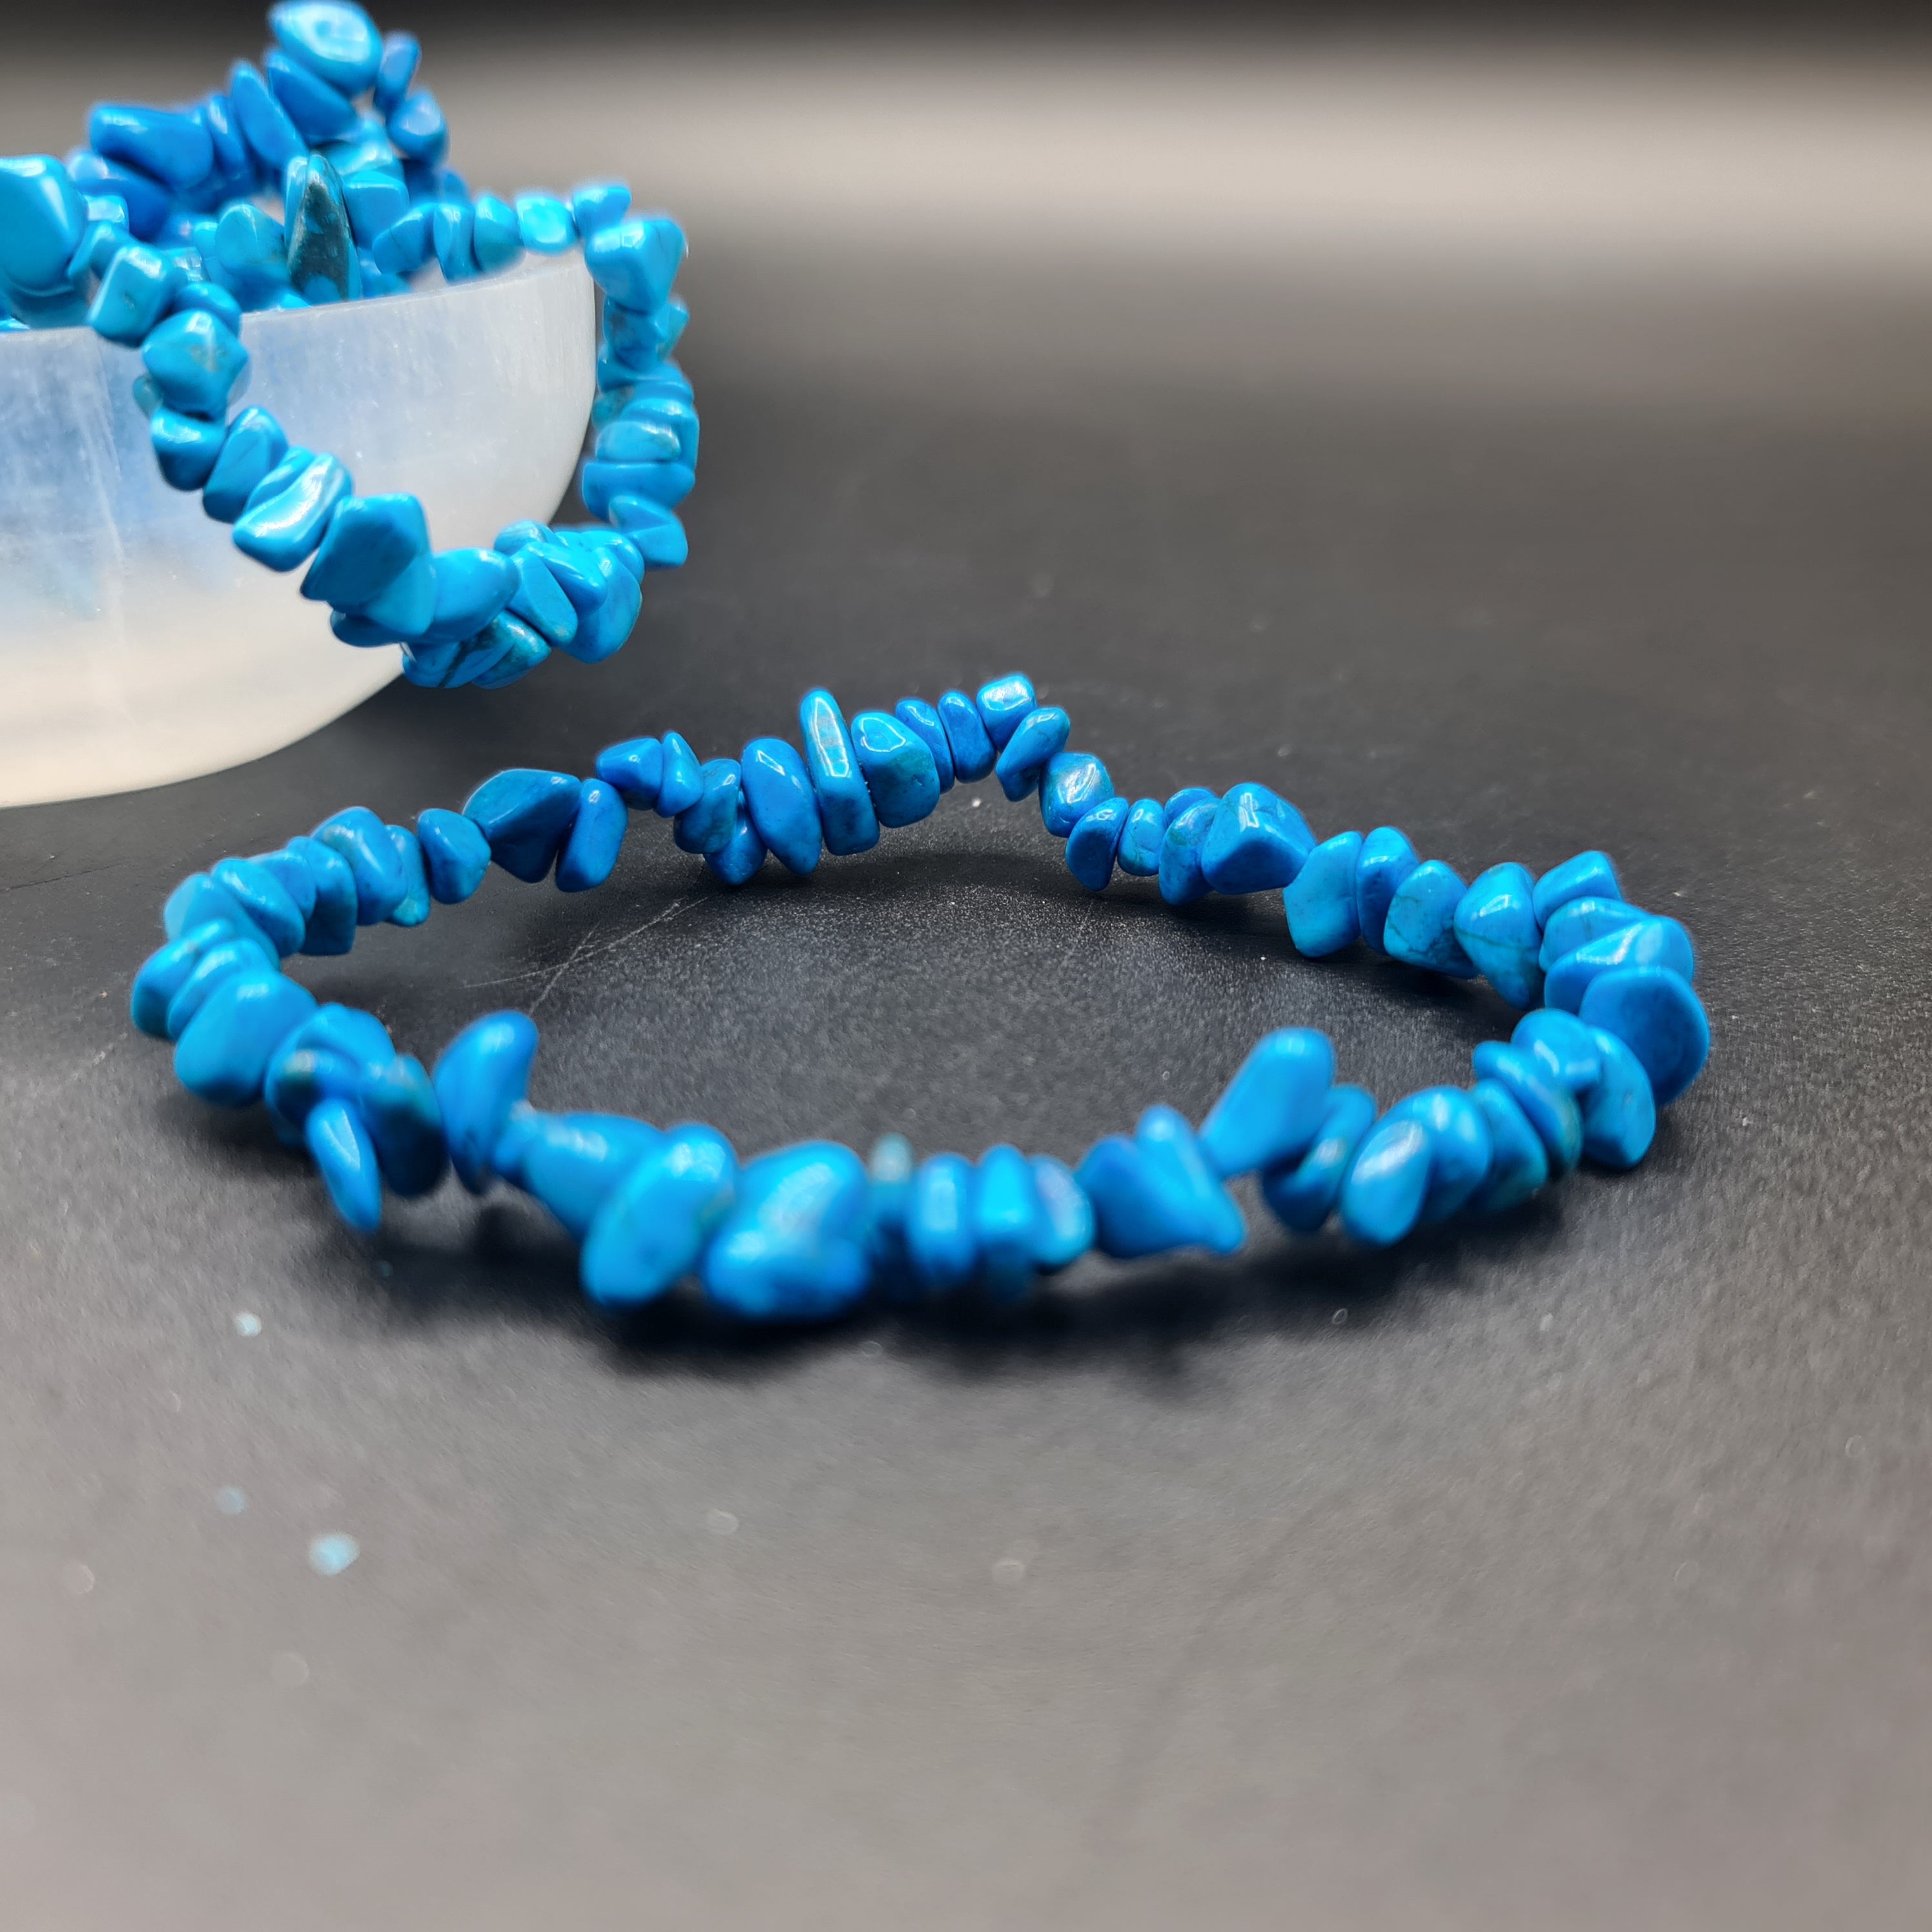 Blue Howlite Chip Bracelet, Healing Crystal Bracelet, Blue Howlite Stone Bracelet, Stretchy Elasticated Bracelet, Howlite Jewellery